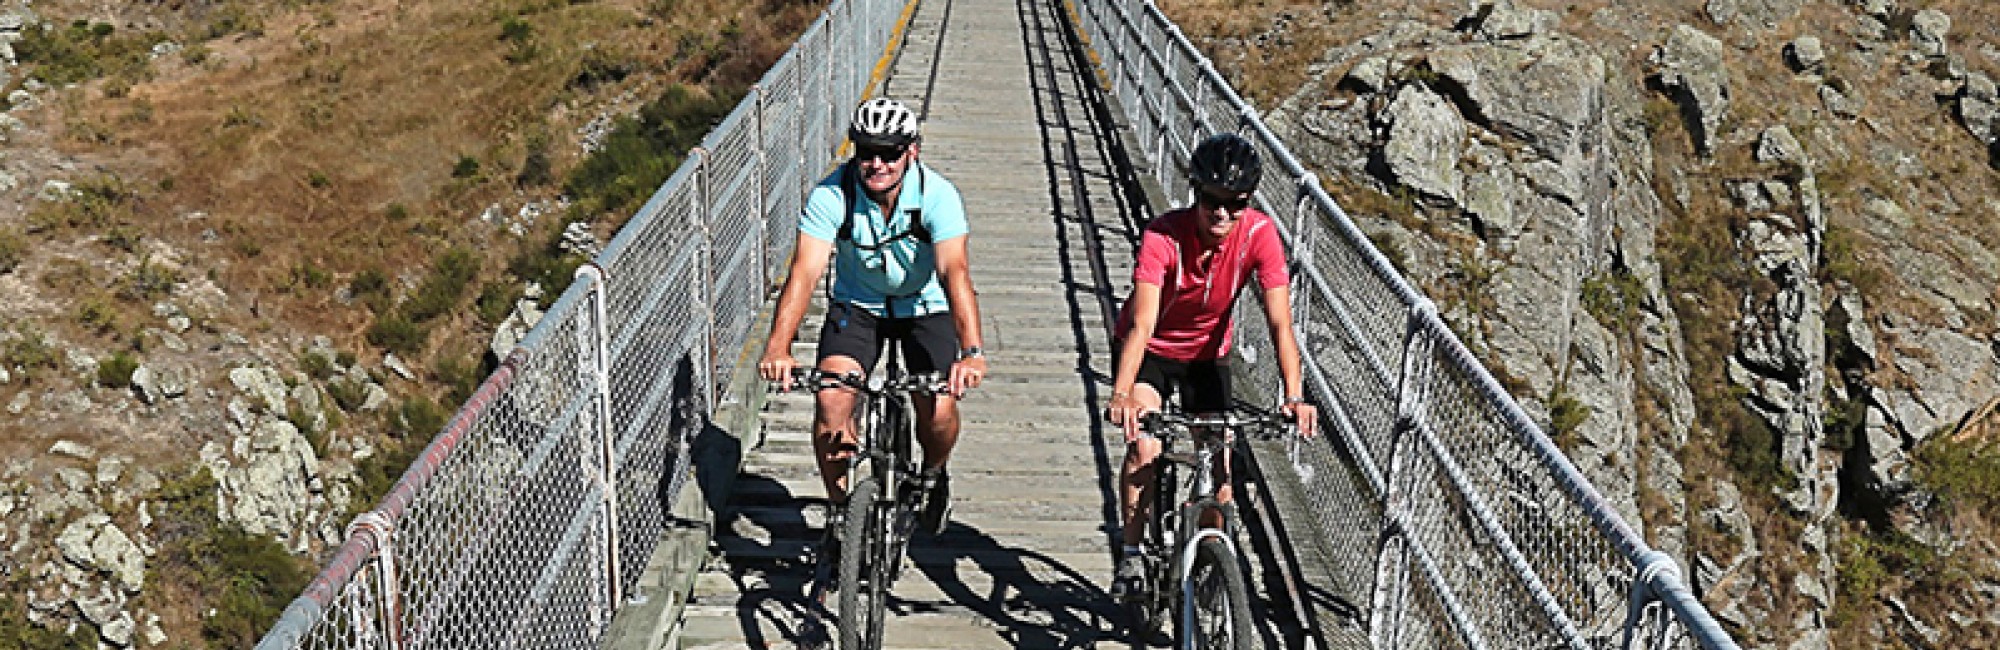 Otago Central Rail Trail Poolburn Viaduct credit James Jubb landing